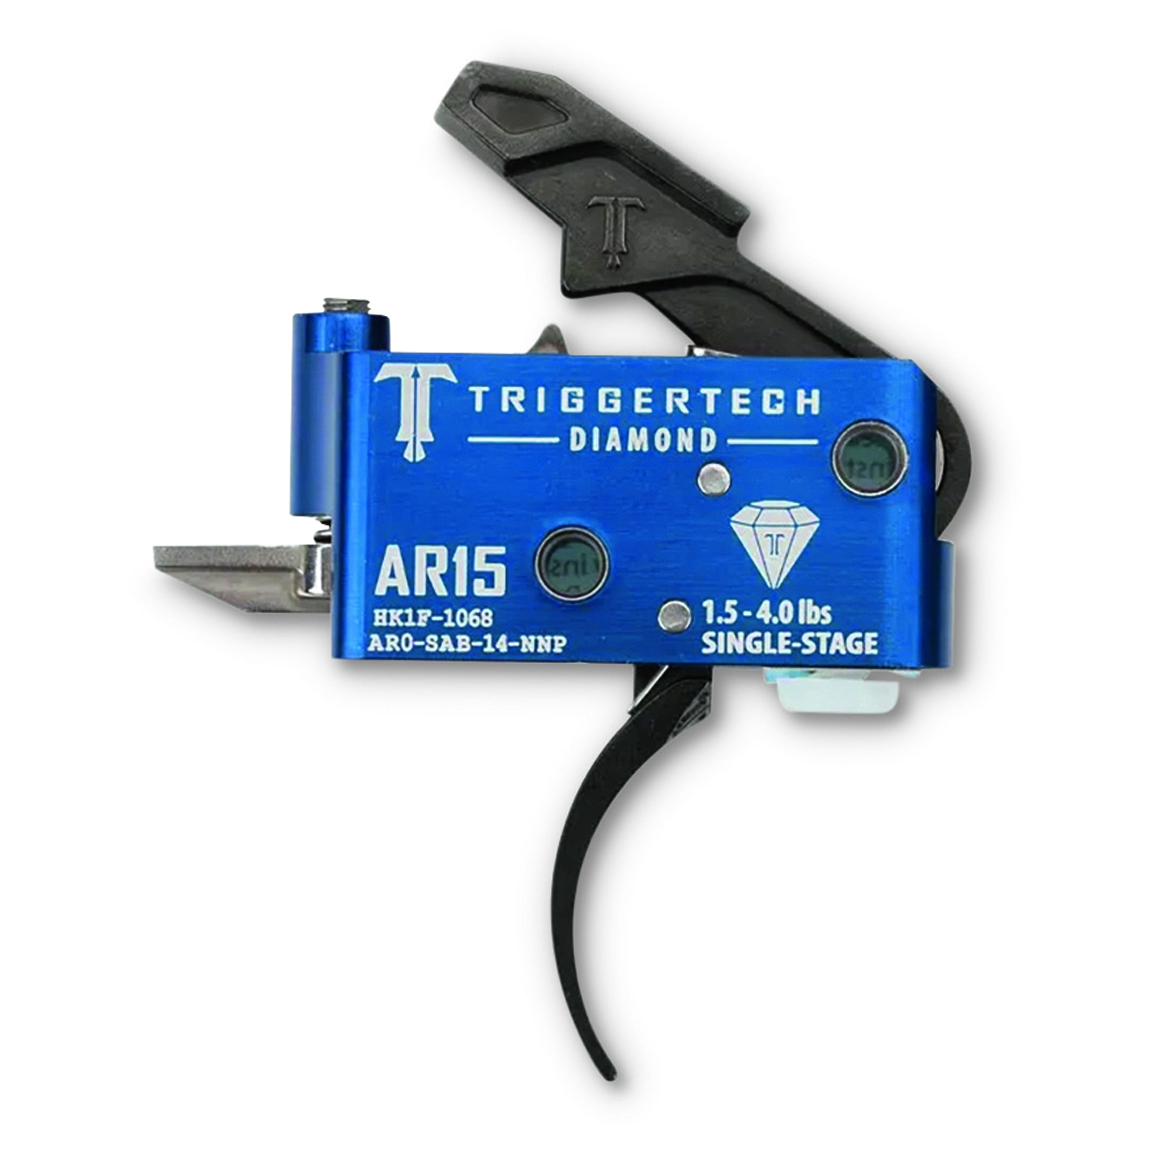 TriggerTech AR-15 Diamond Single-Stage Curved Trigger, 1.5-4 lbs.